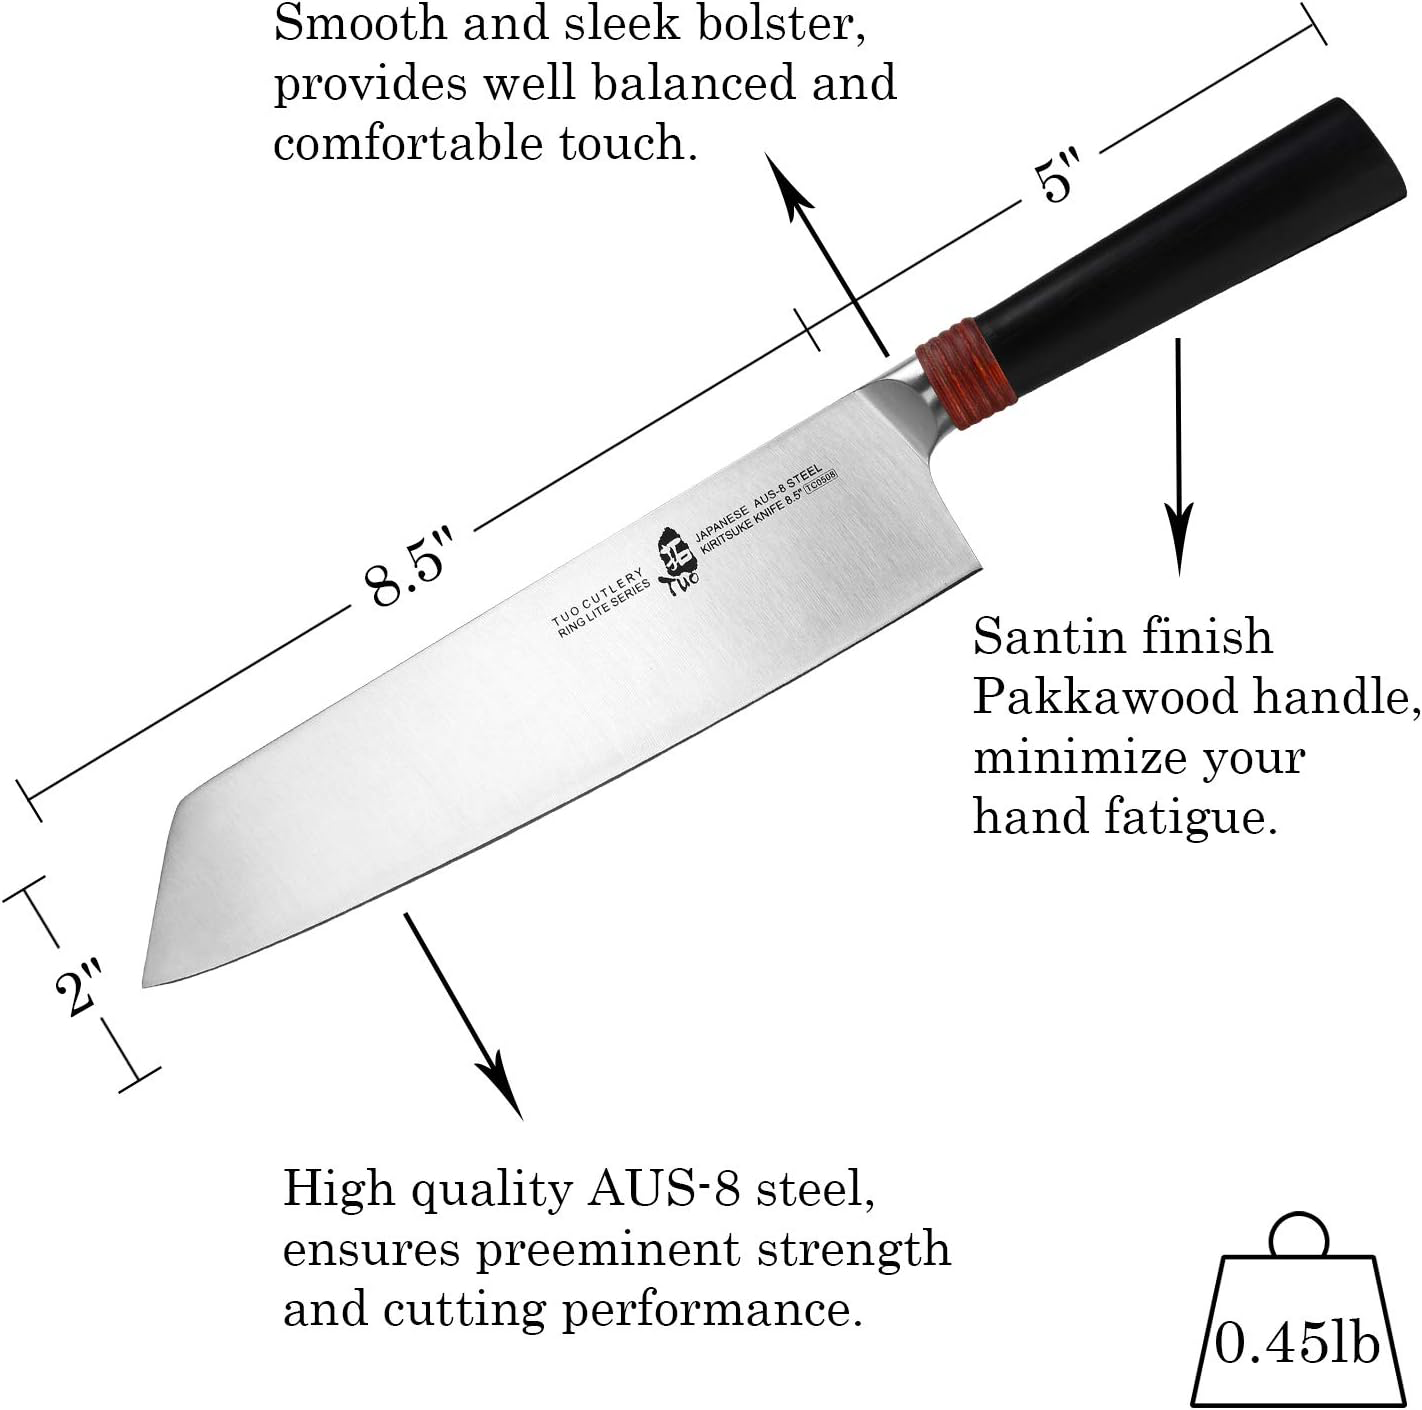 Professional Kitchen Knives Set with Knife Gift Case Sharp Chef Knife Sushi  Knife Japanese Knife Fruit